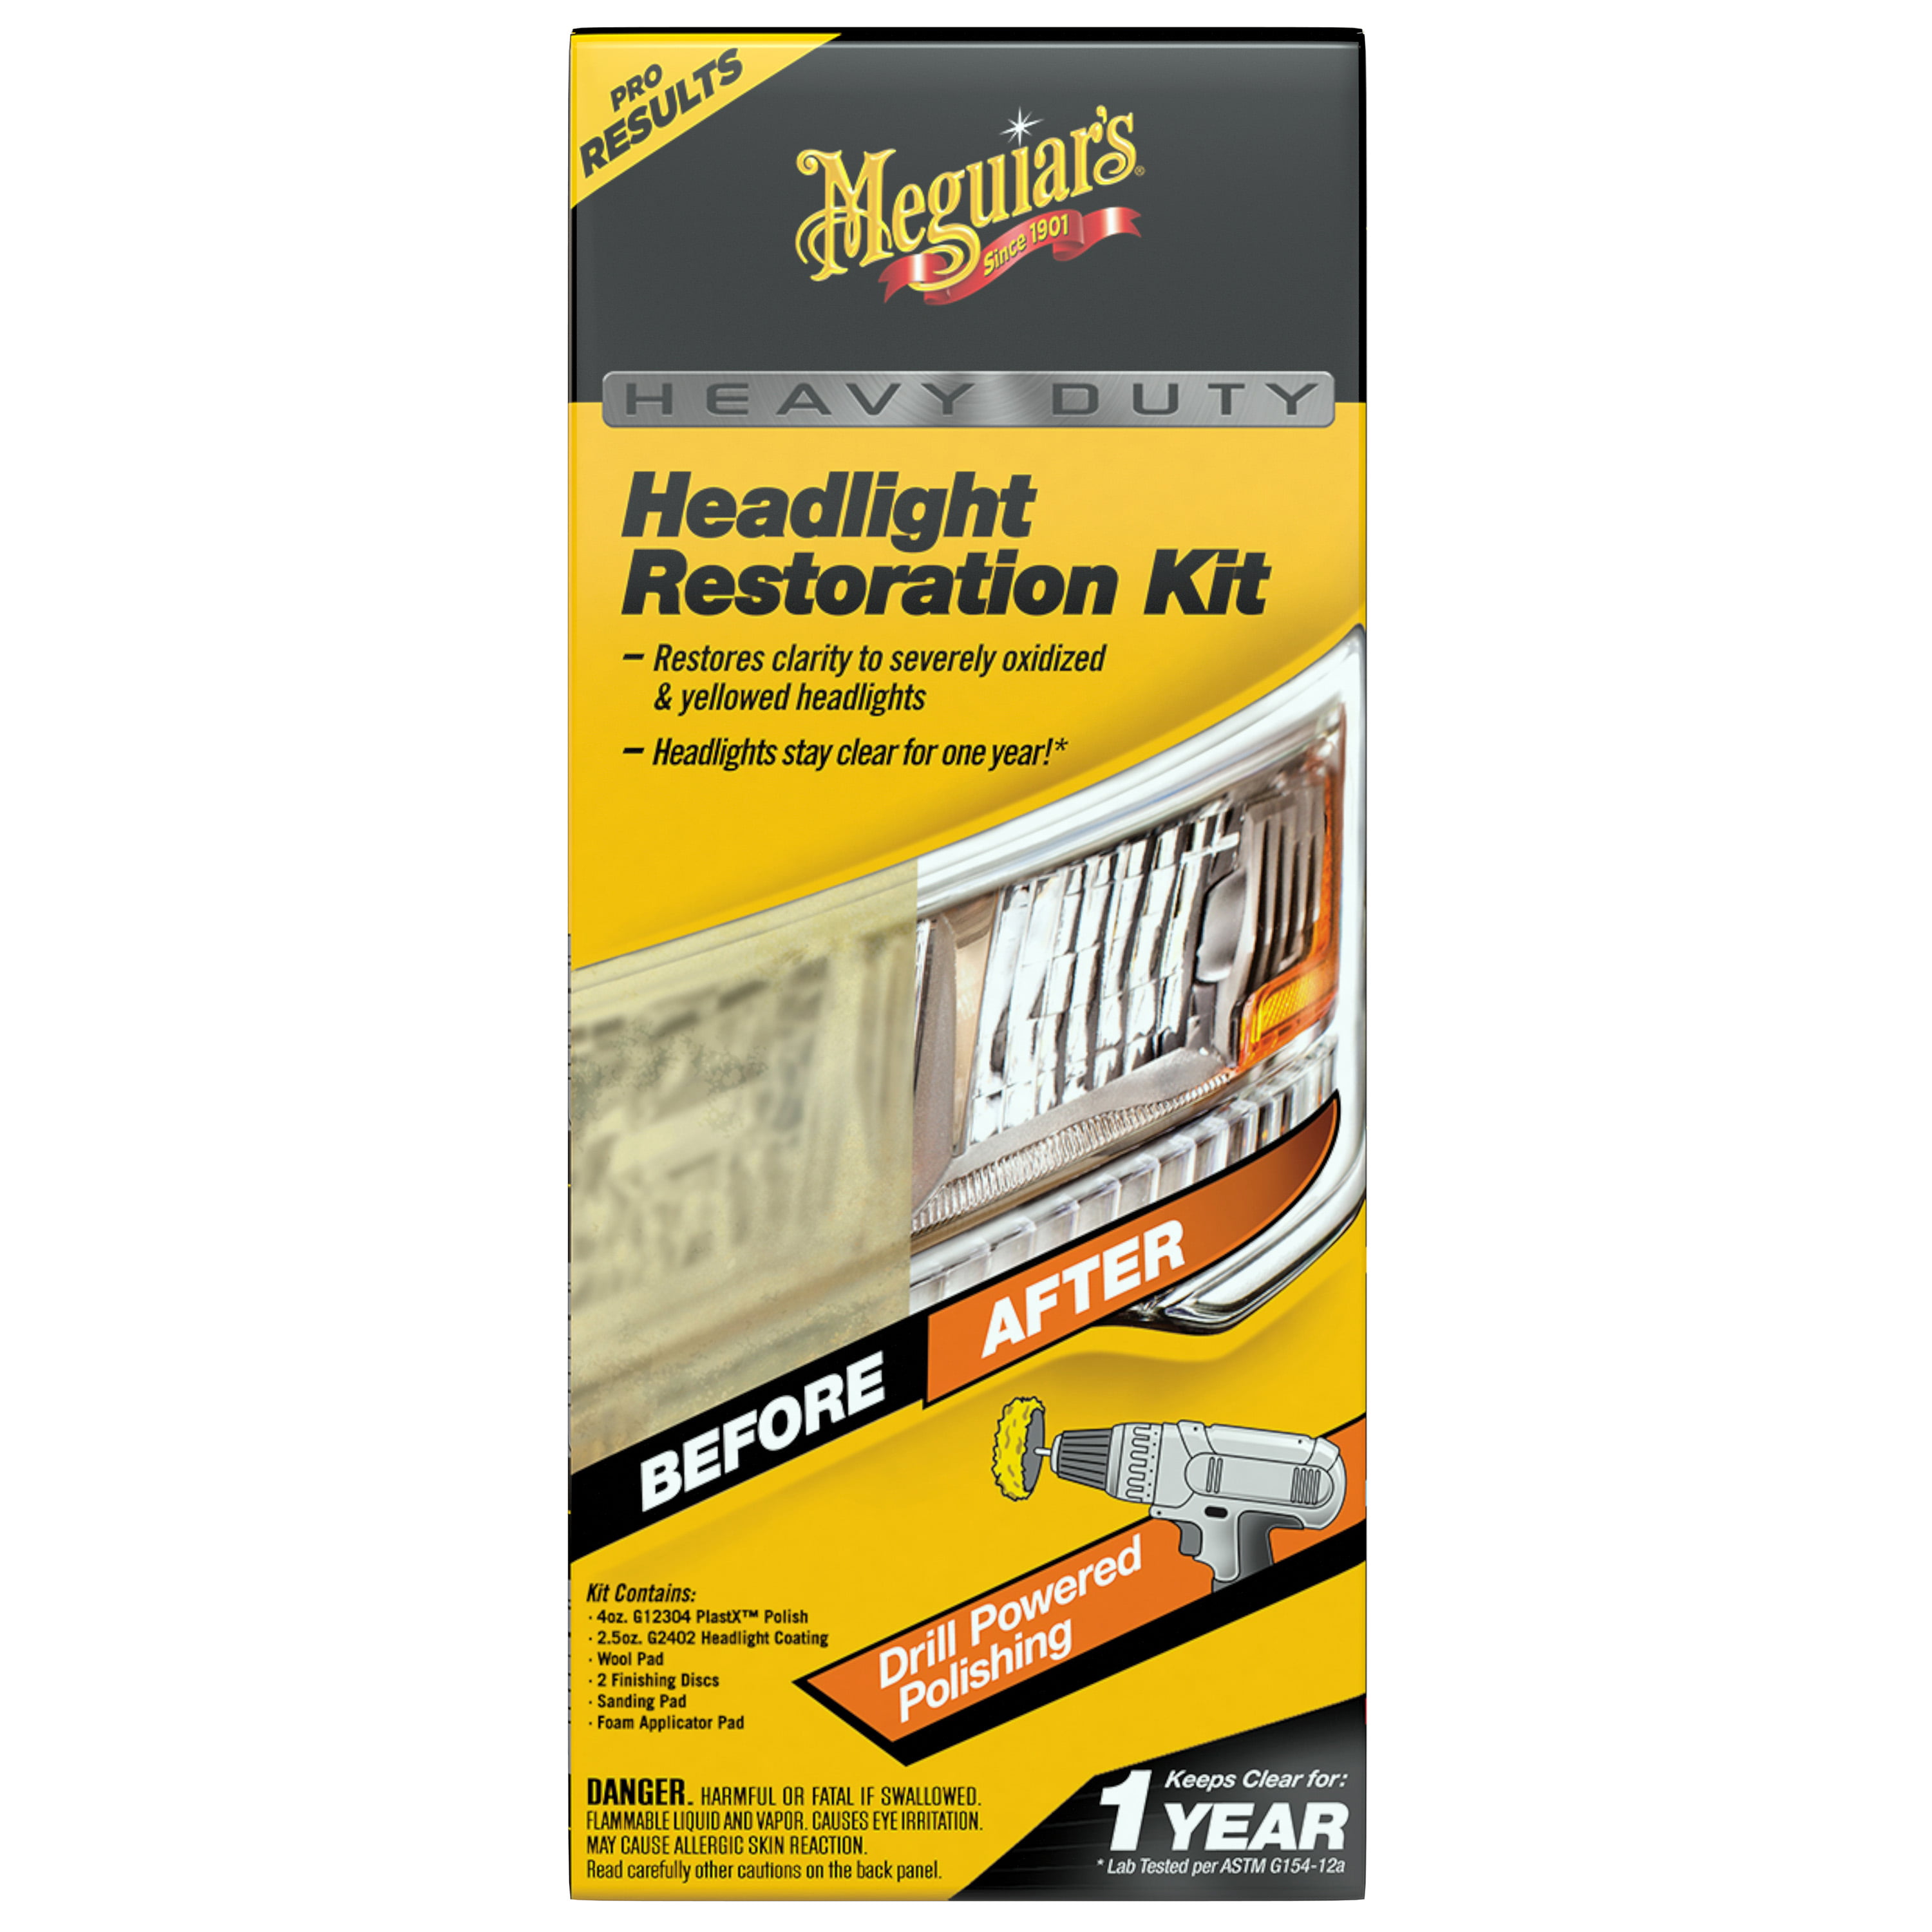 Meguiars PlastX Headlight Restore Review 